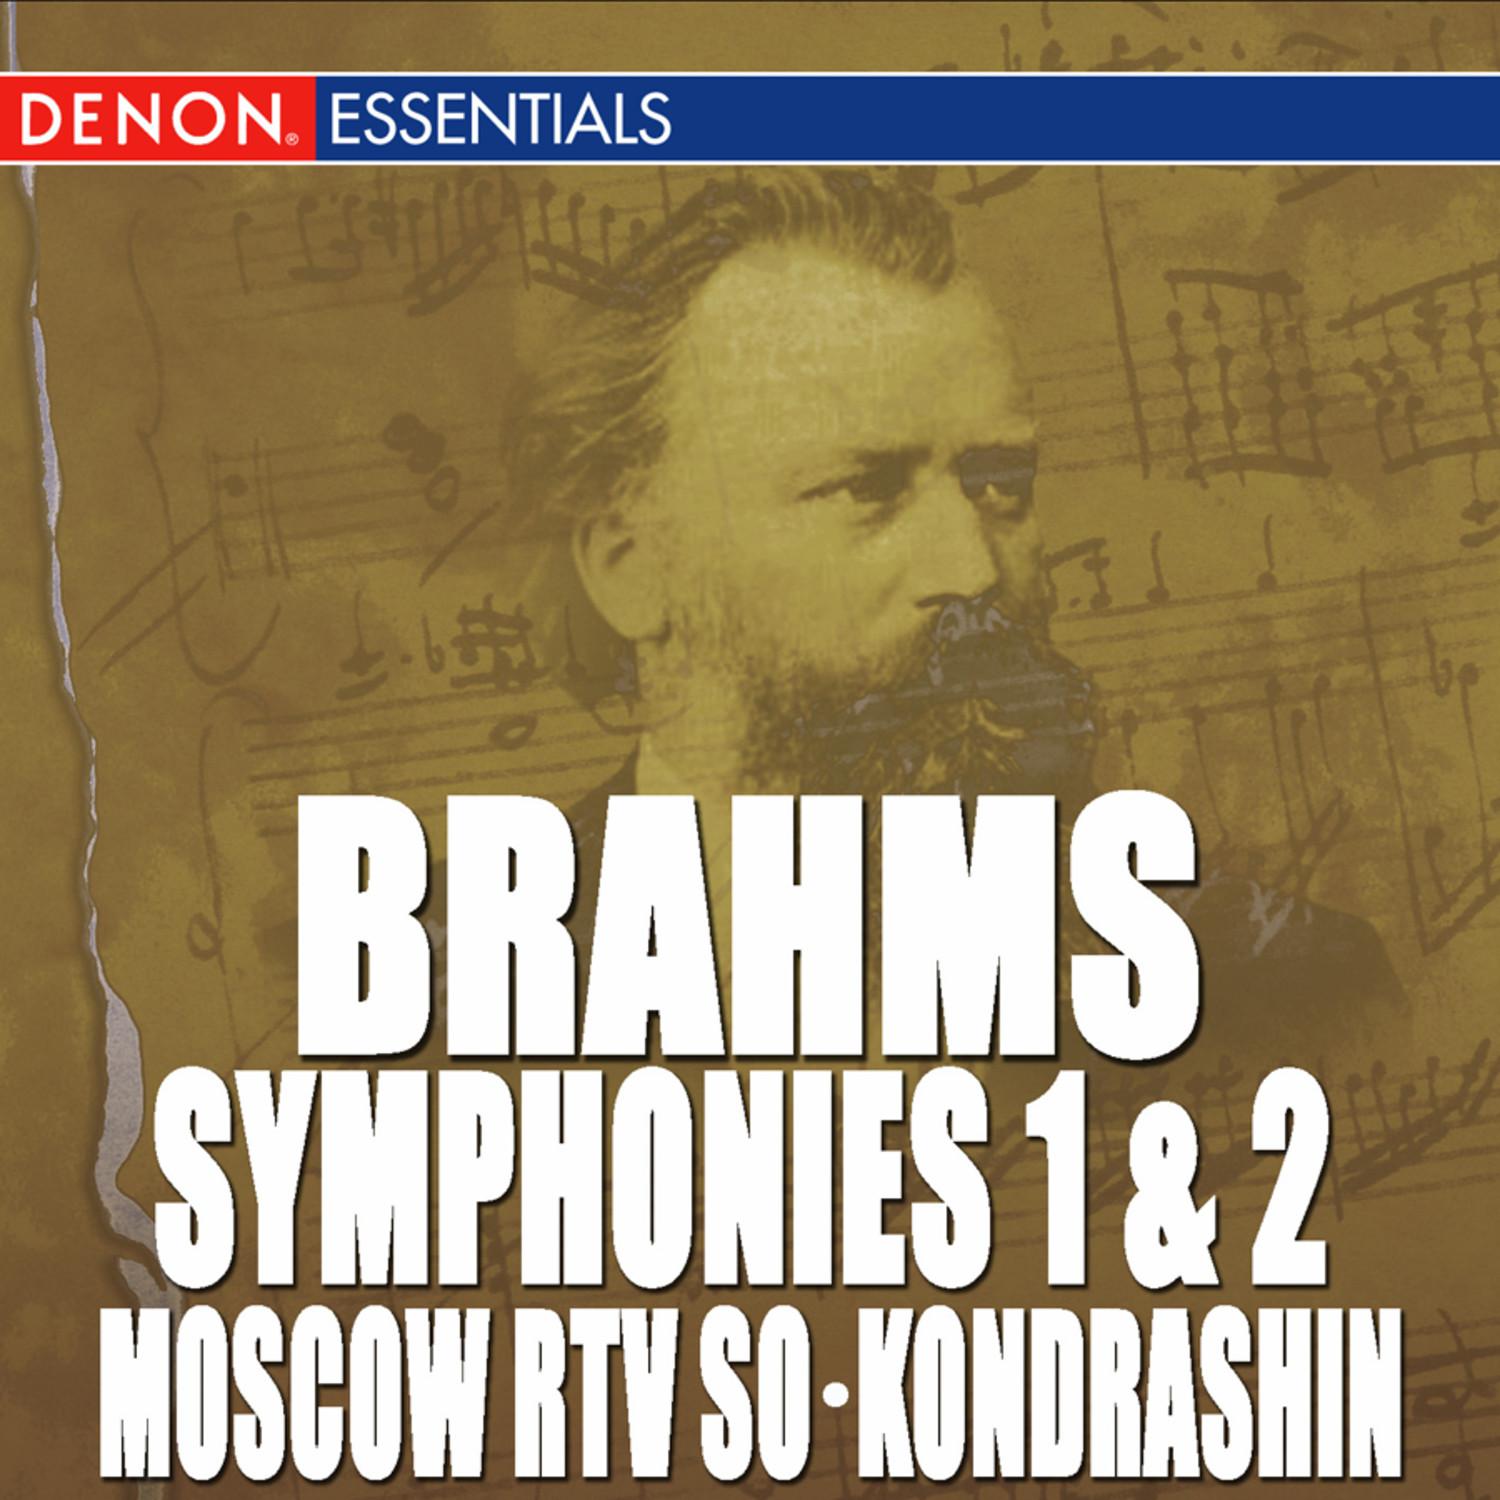 Brahms: Symphony Nos. 1 & 2